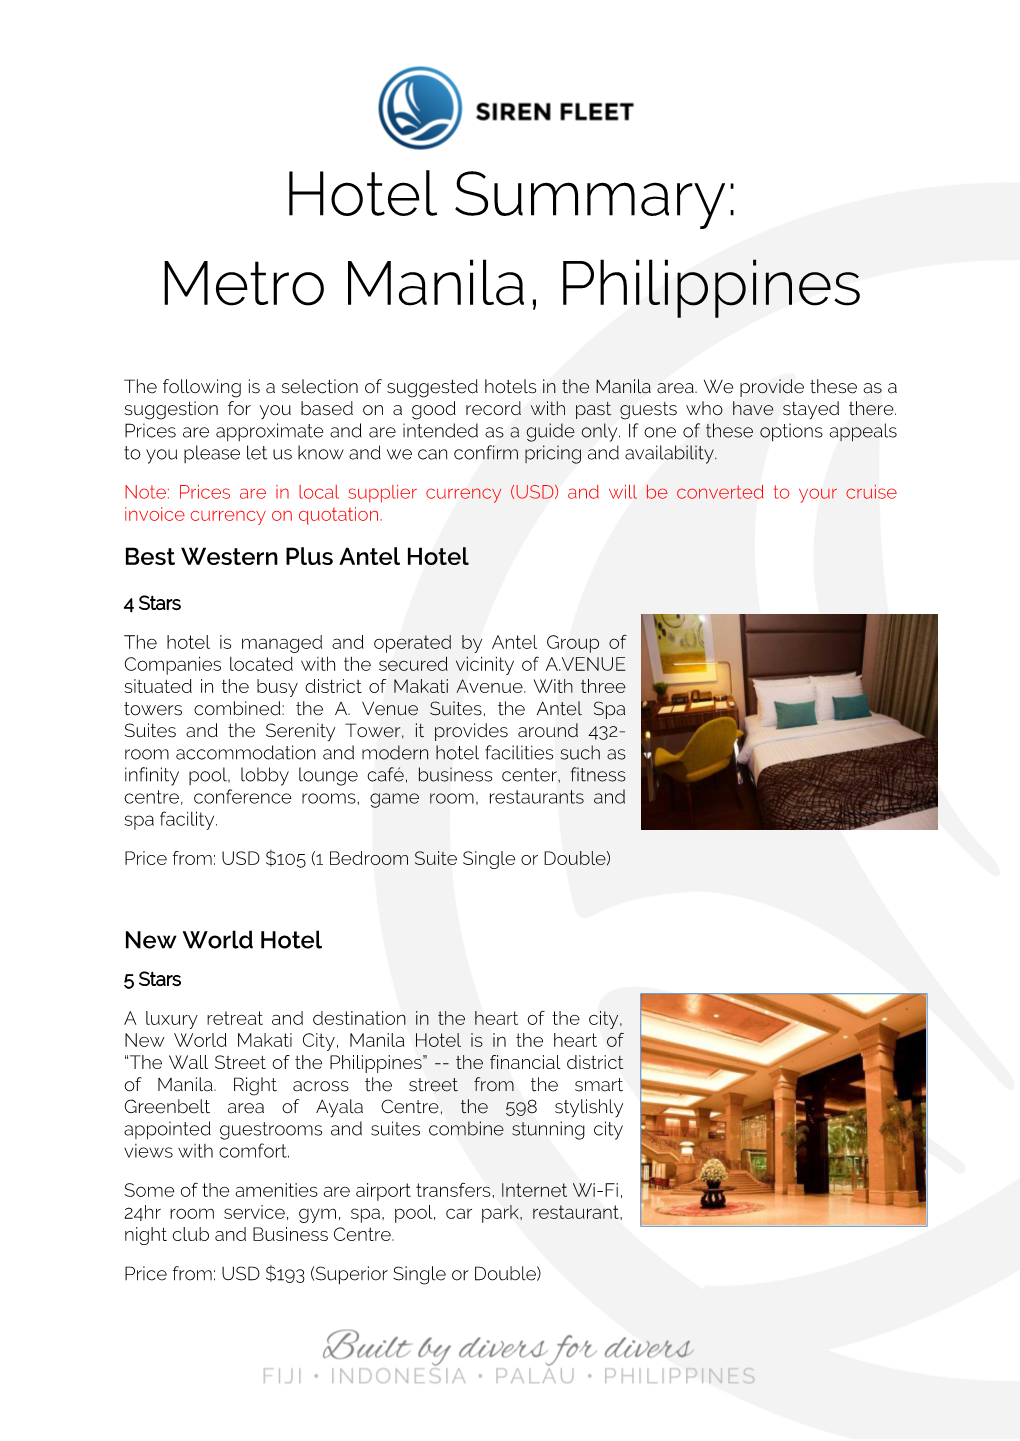 Hotel Summary: Metro Manila, Philippines